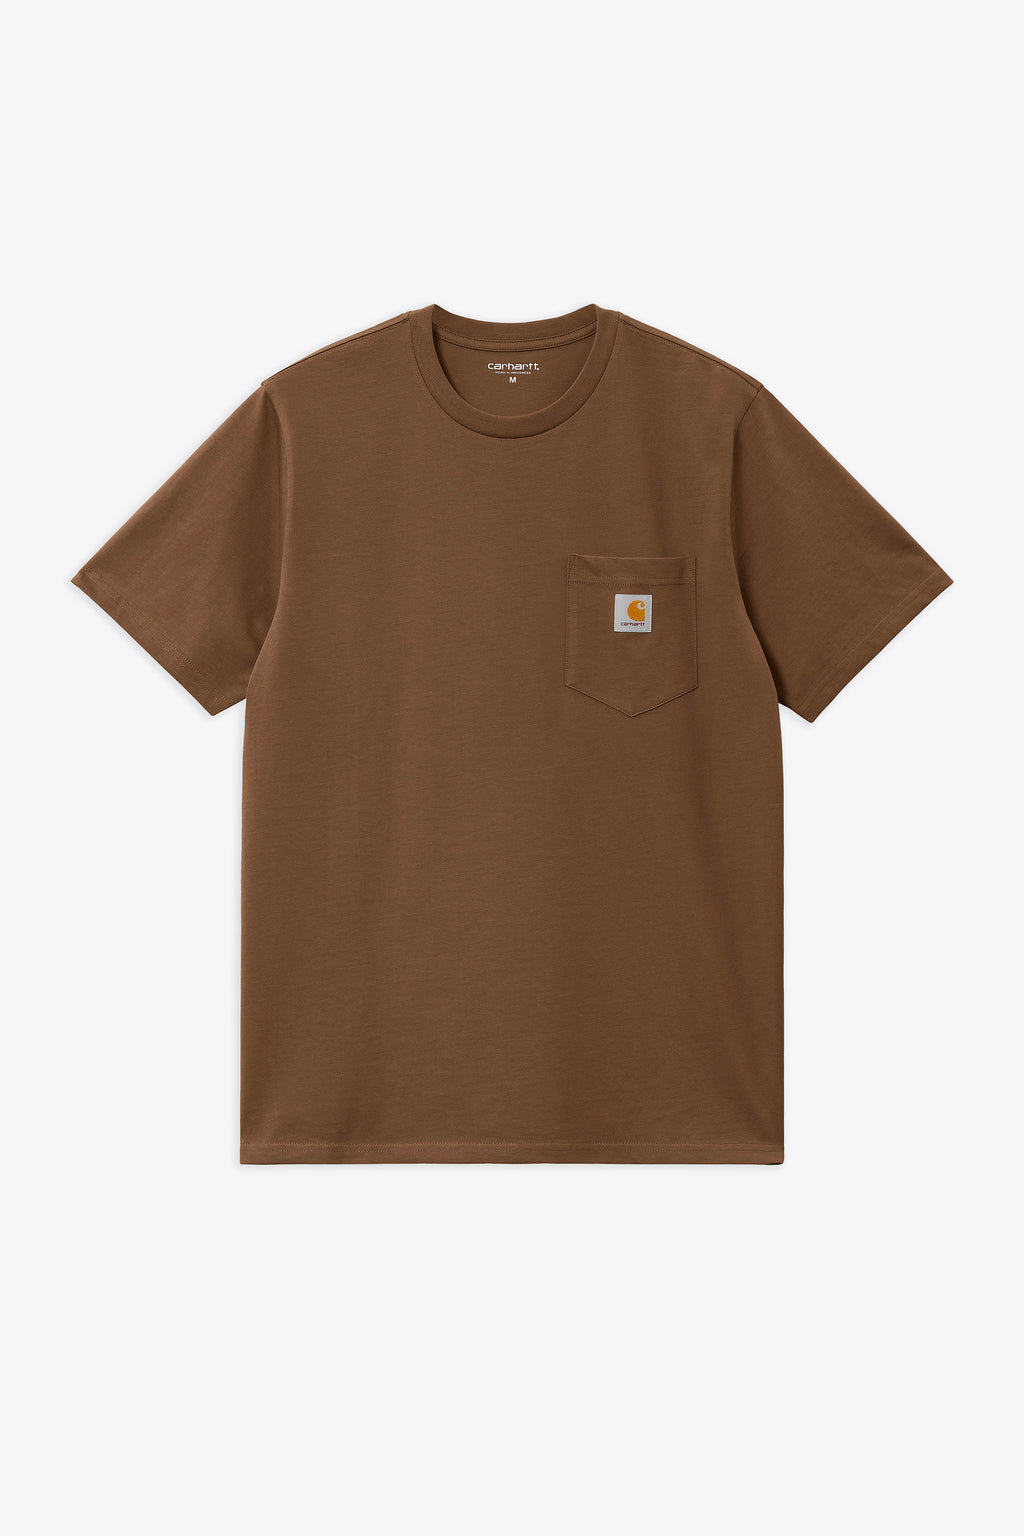 alt-image__T-shirt-marrone-con-taschino-al-petto-e-logo---S/S-Pocket-T-Shirt